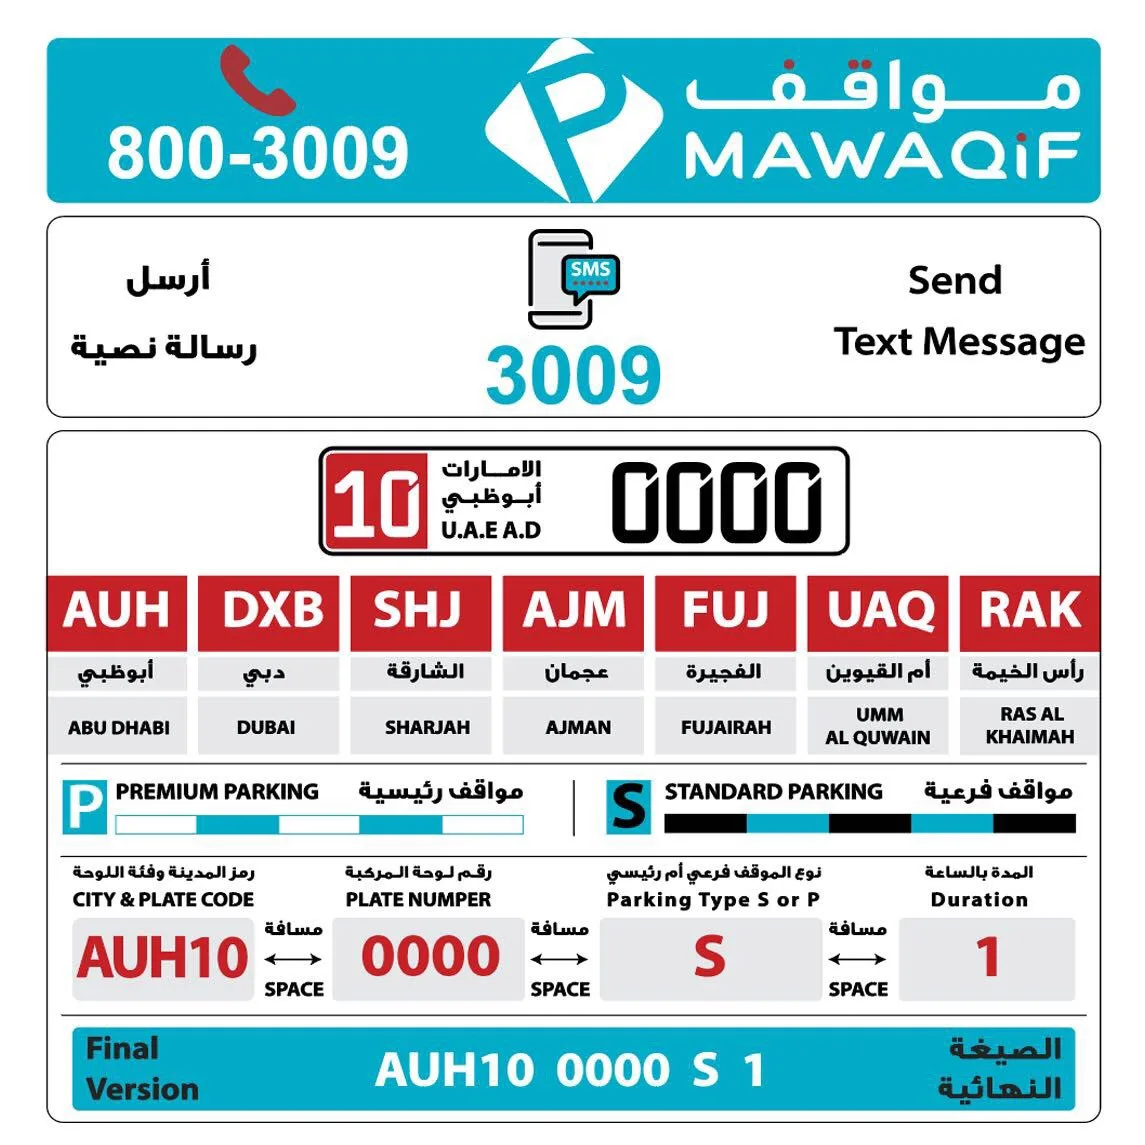 Mawaqif SMS Parking Guide Abu Dhabi